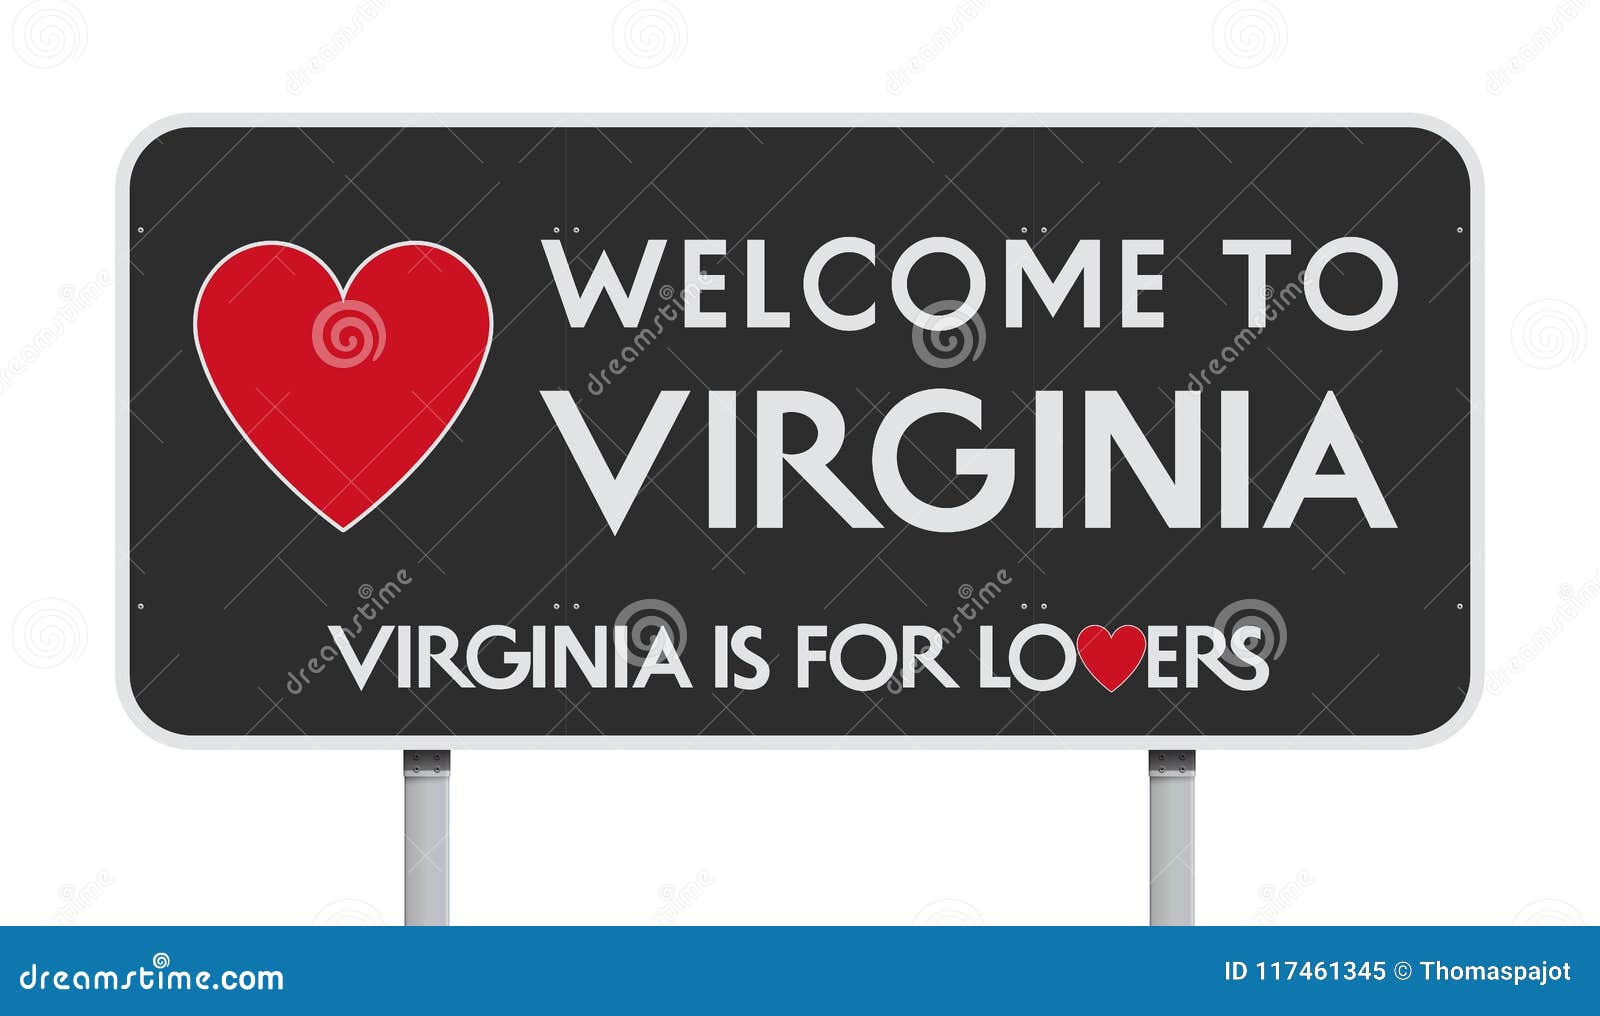 Welcome To Virginia Road Sign Cartoon Vector | CartoonDealer.com #117461345